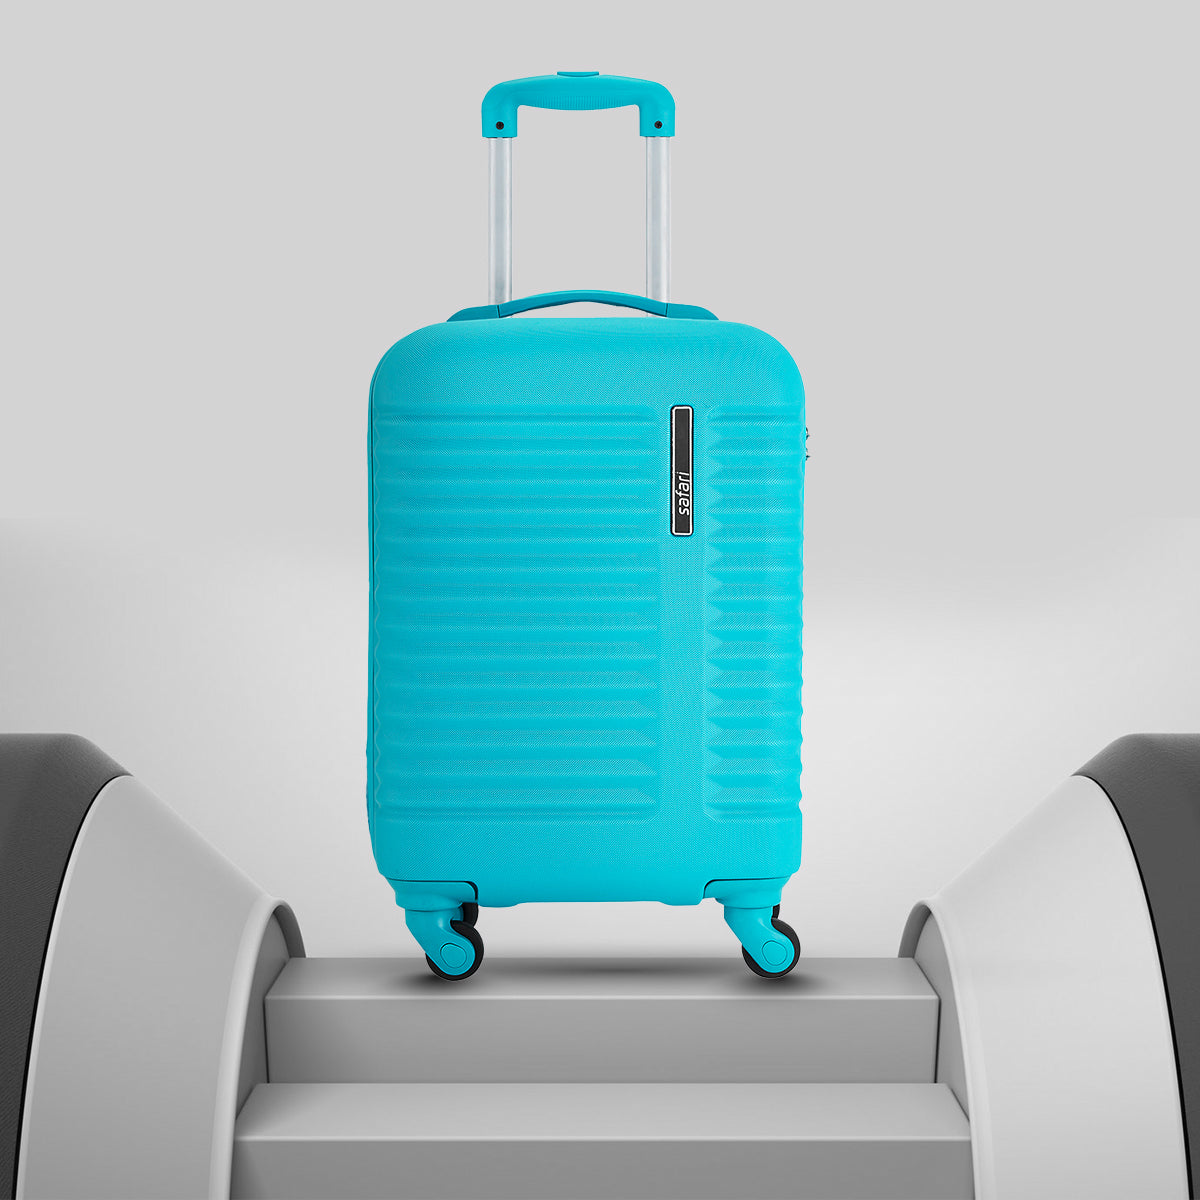 Aerodyne Hard Luggage With TSA Lock and Airline Compliant Sizing Combo (Small, Medium and Large) - Cyan